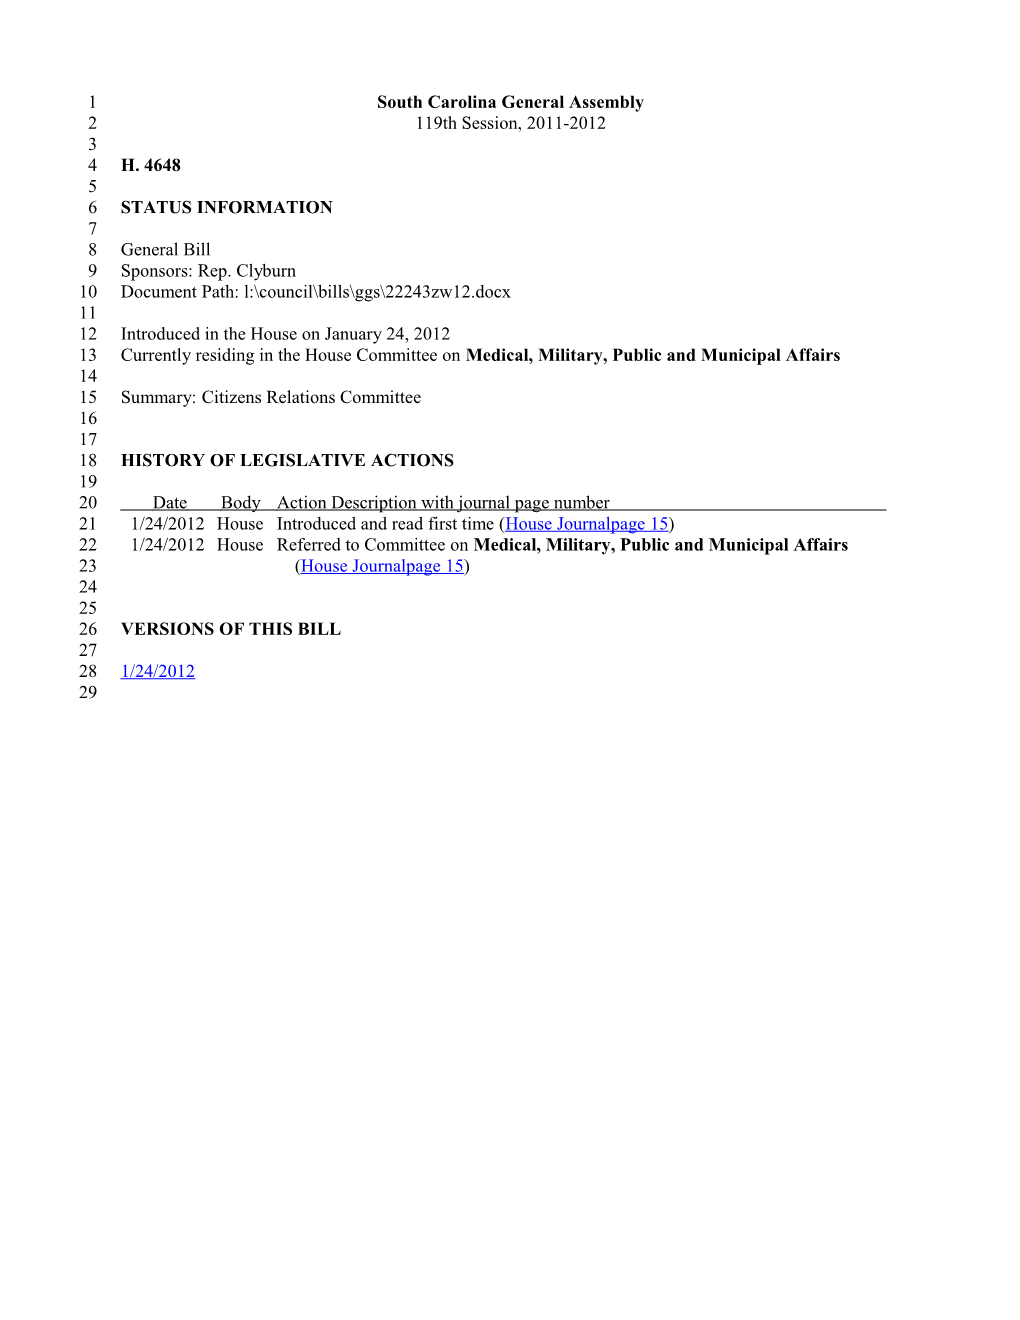 2011-2012 Bill 4648: Citizens Relations Committee - South Carolina Legislature Online